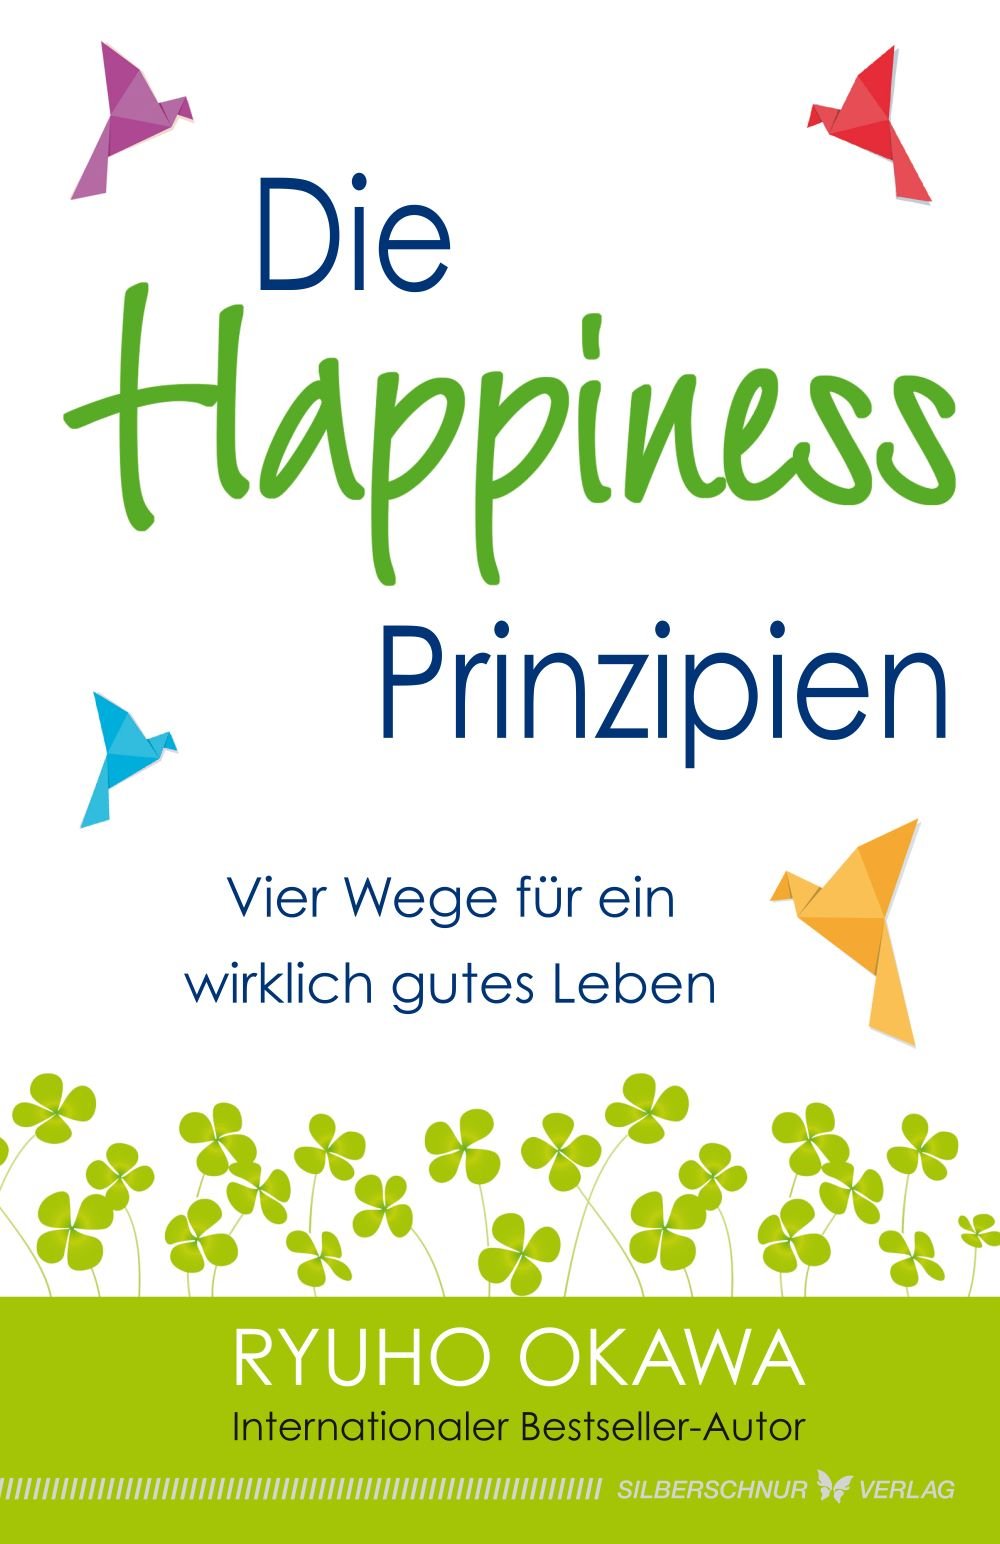 Book, The Laws of Happiness : Love, Wisdom, Self-Reflection and Progress, Ryuho Okawa,German - IRH Press International